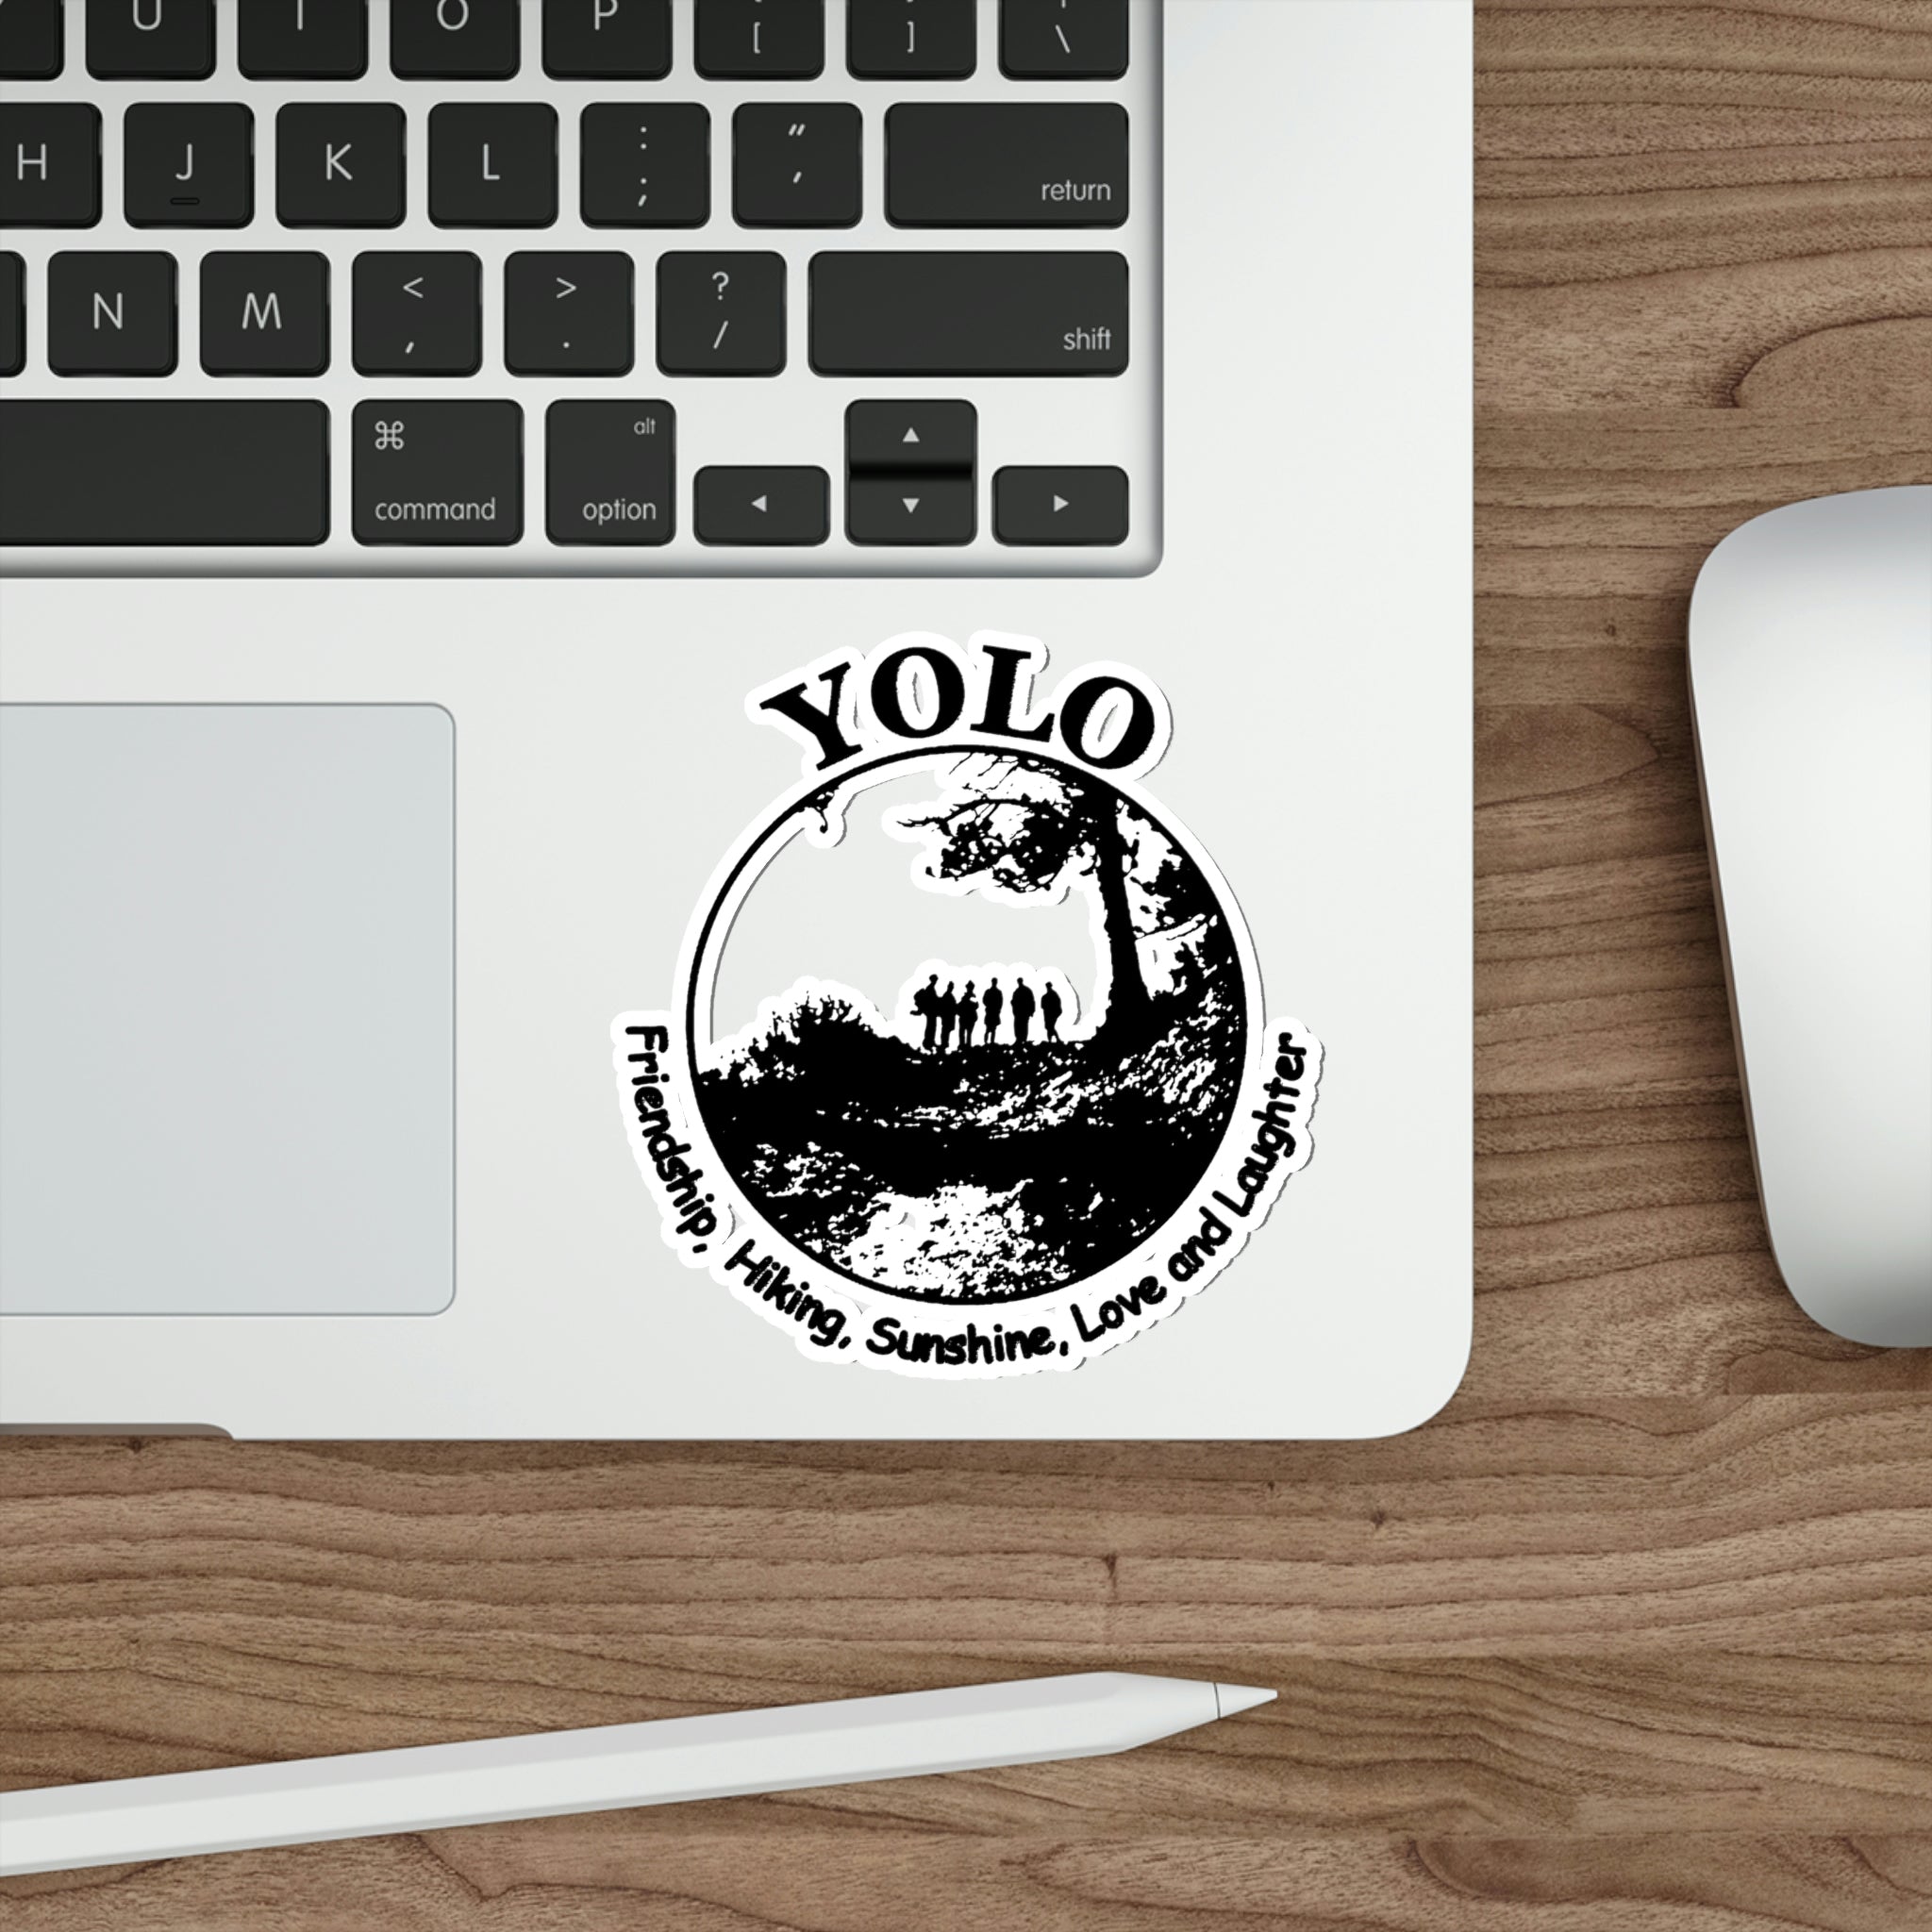 YOLO Stickers